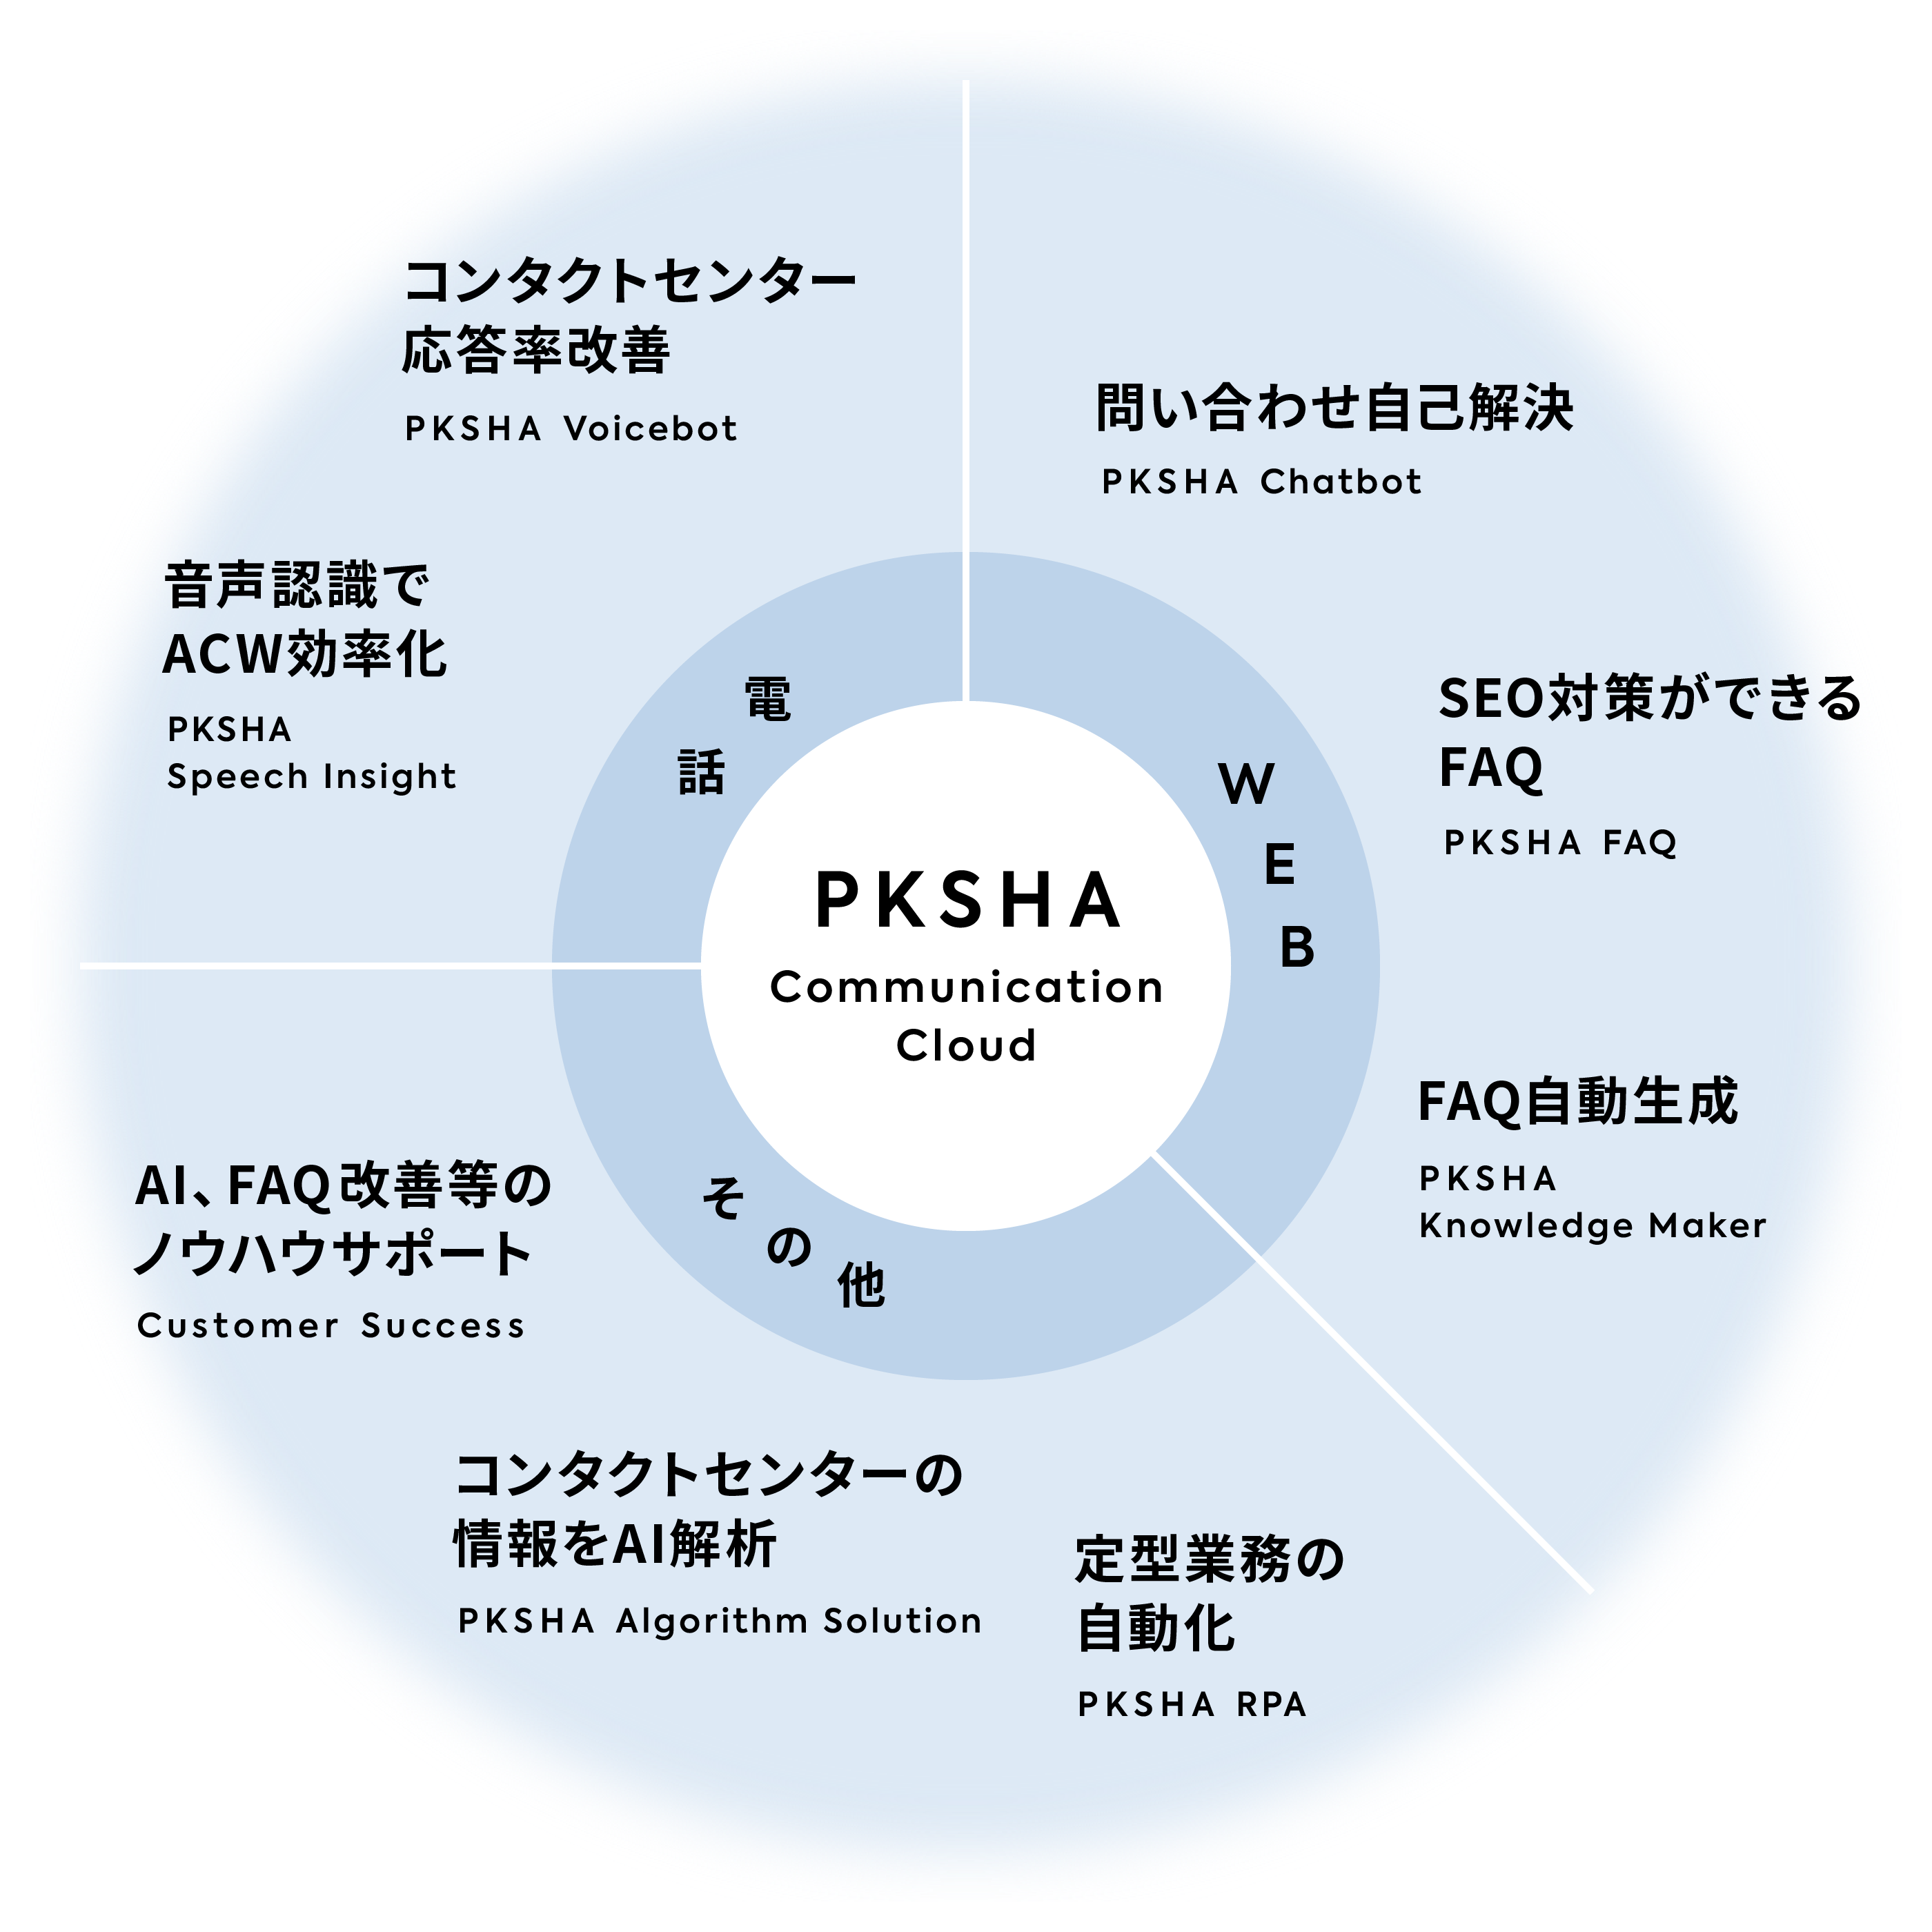 PKSHA Communication Cloud